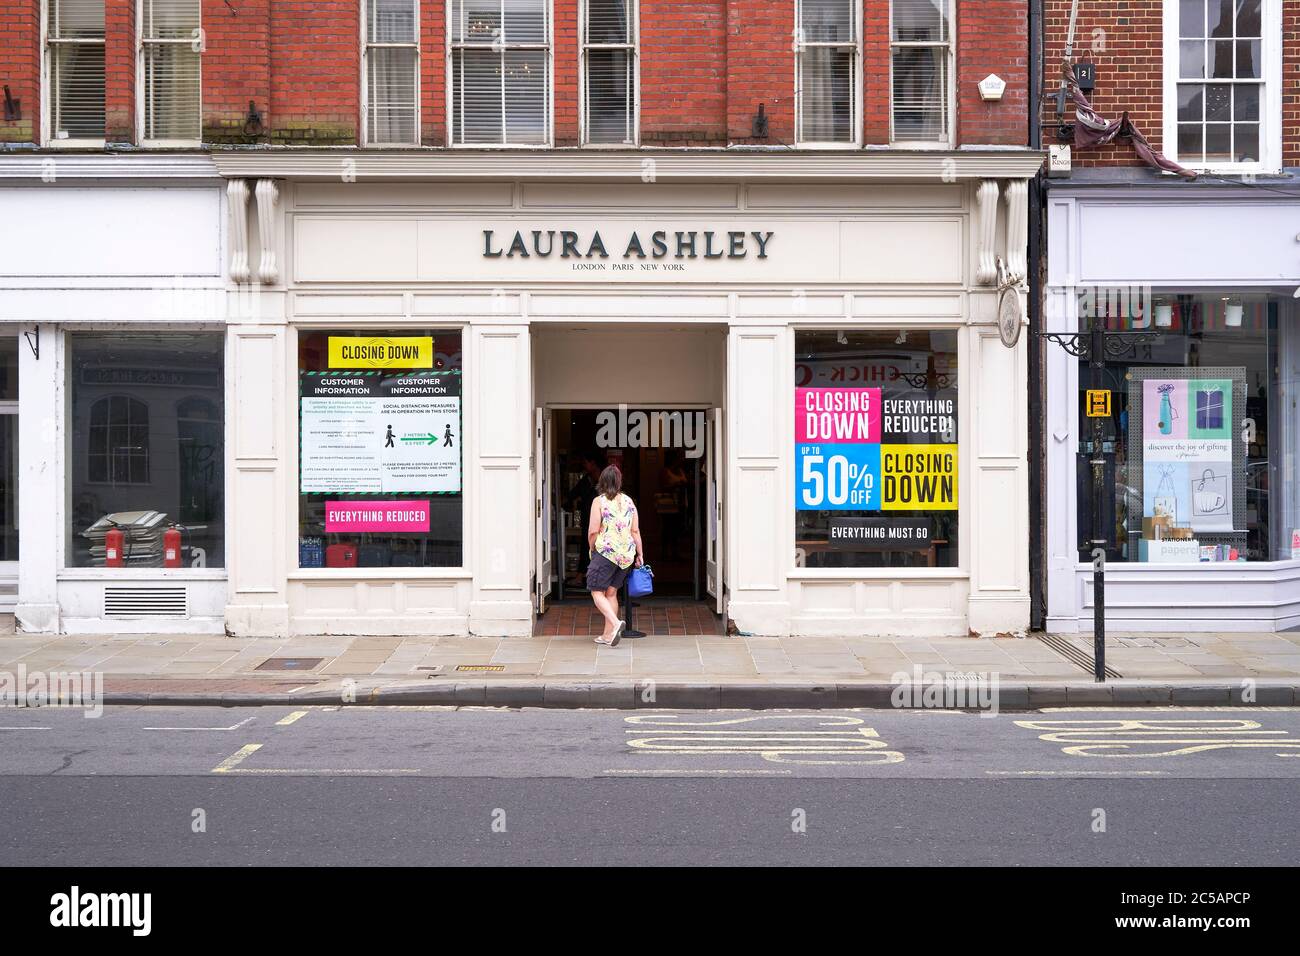 Laura Ashley store closing down sale Stock Photo